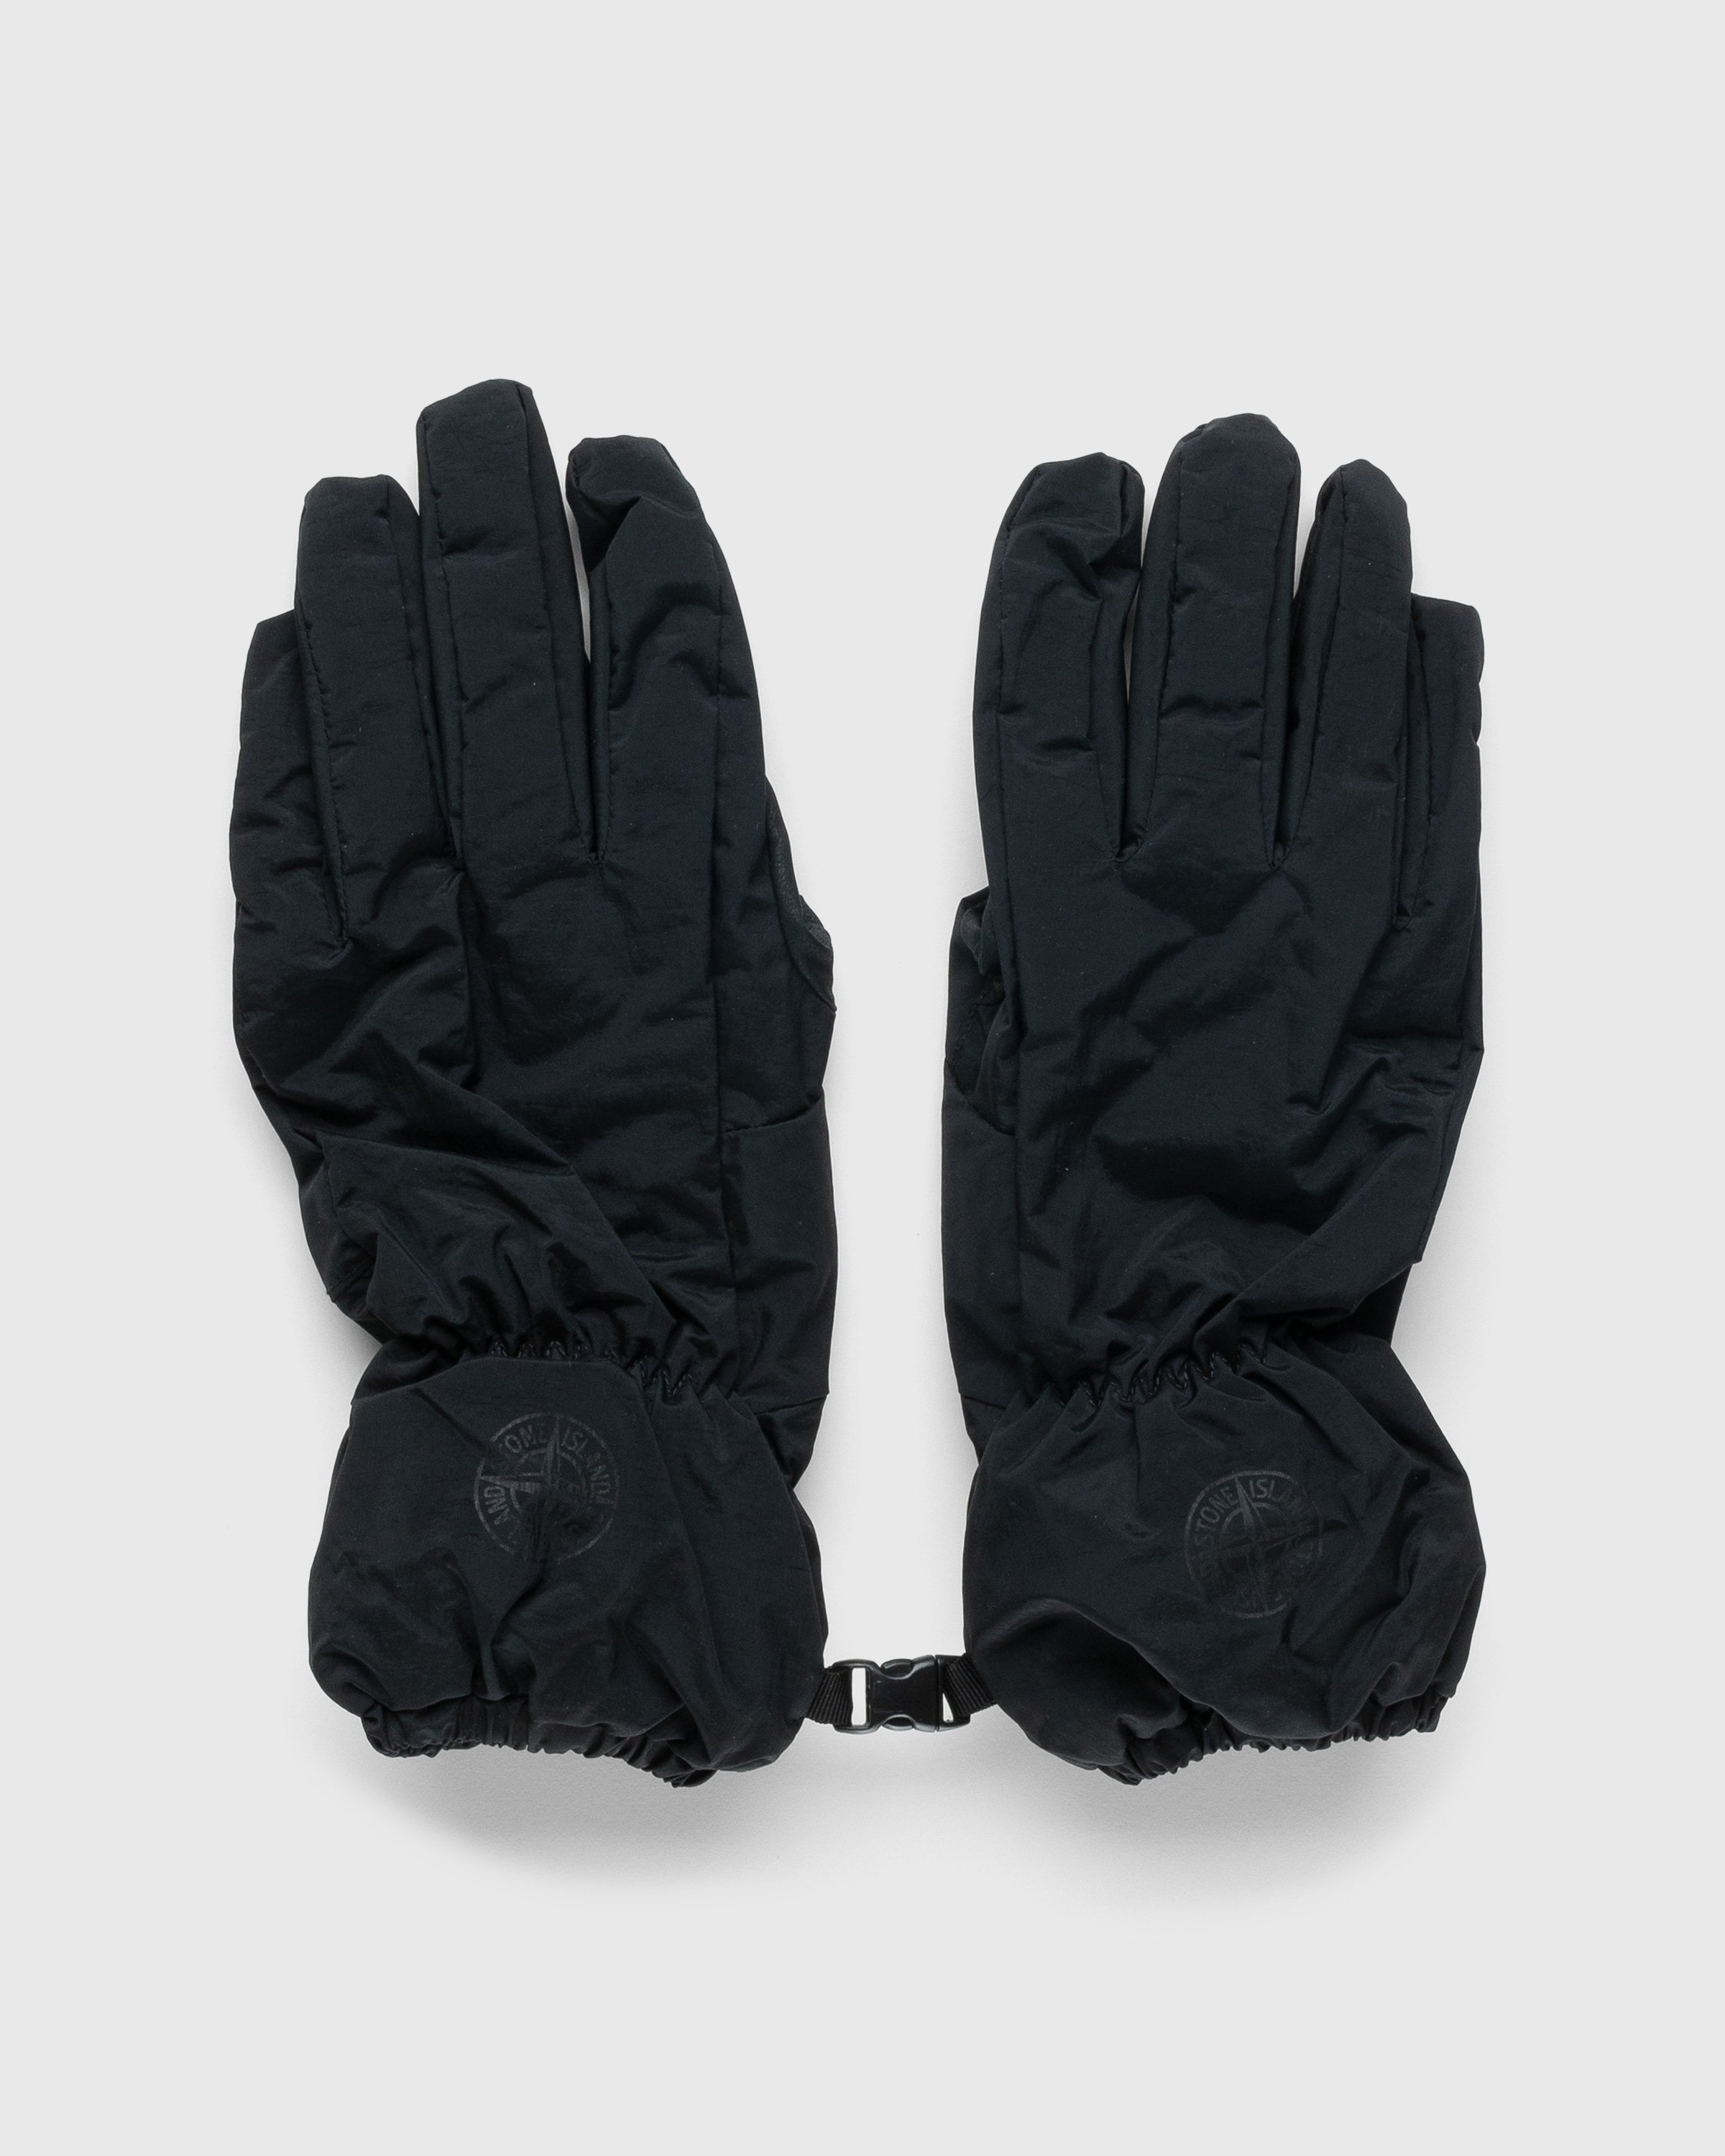 Stone Island - Nylon Metal Gloves Black - Accessories - Black - Image 1